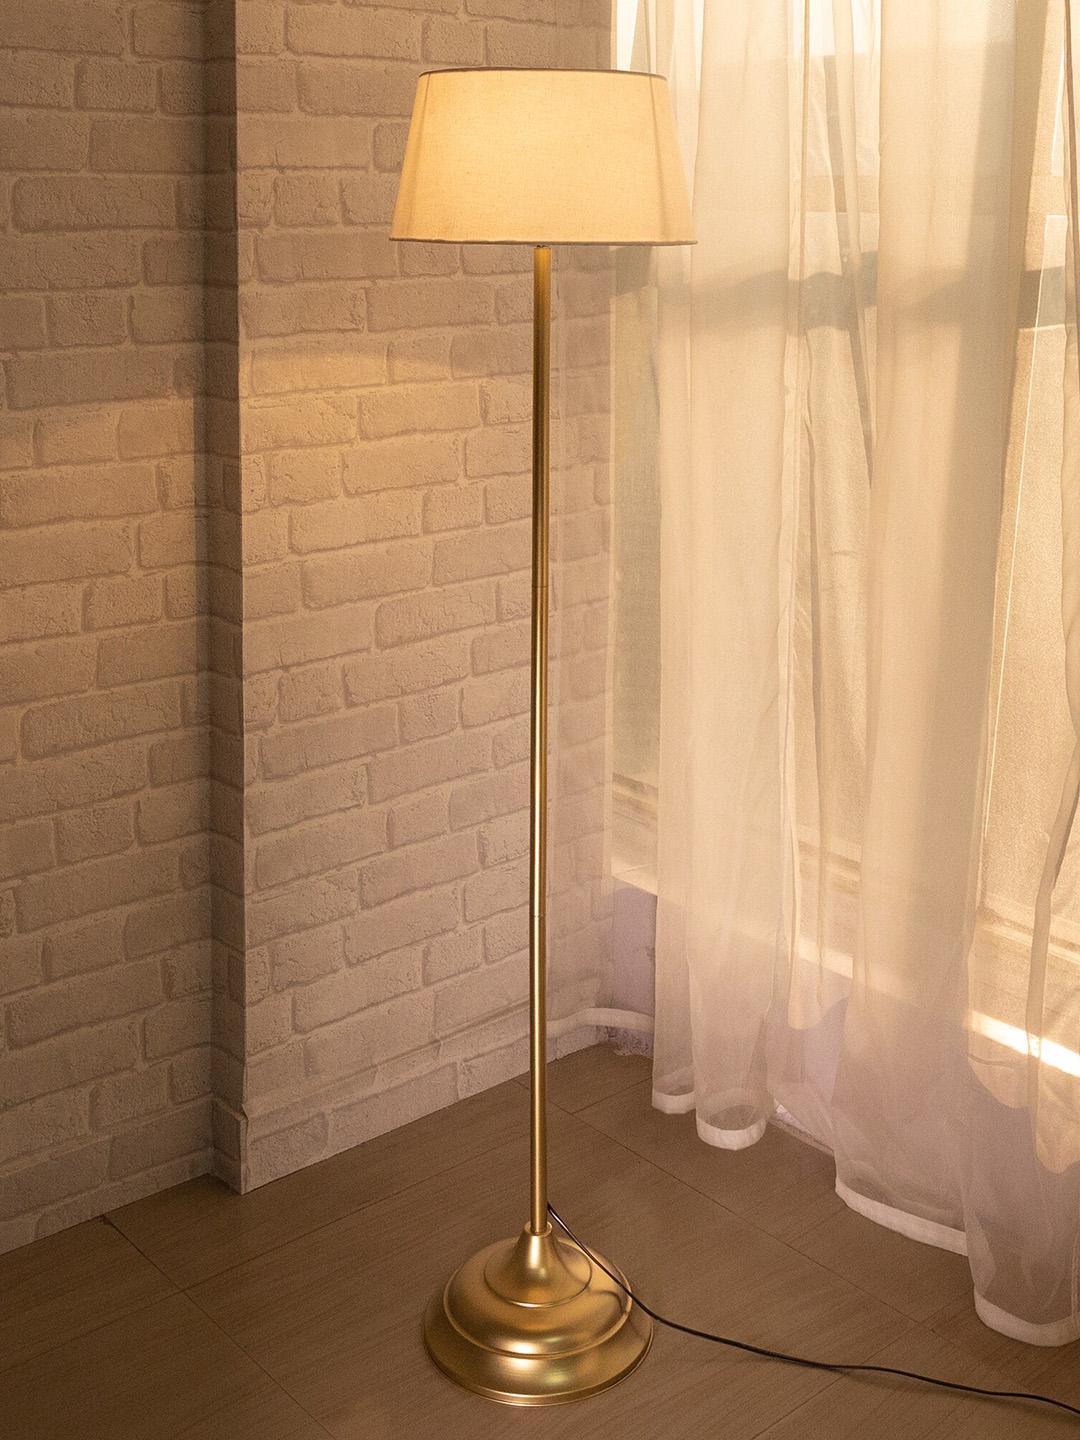 Homesake White & Gold-Toned Metal Floor Lamp with Shade